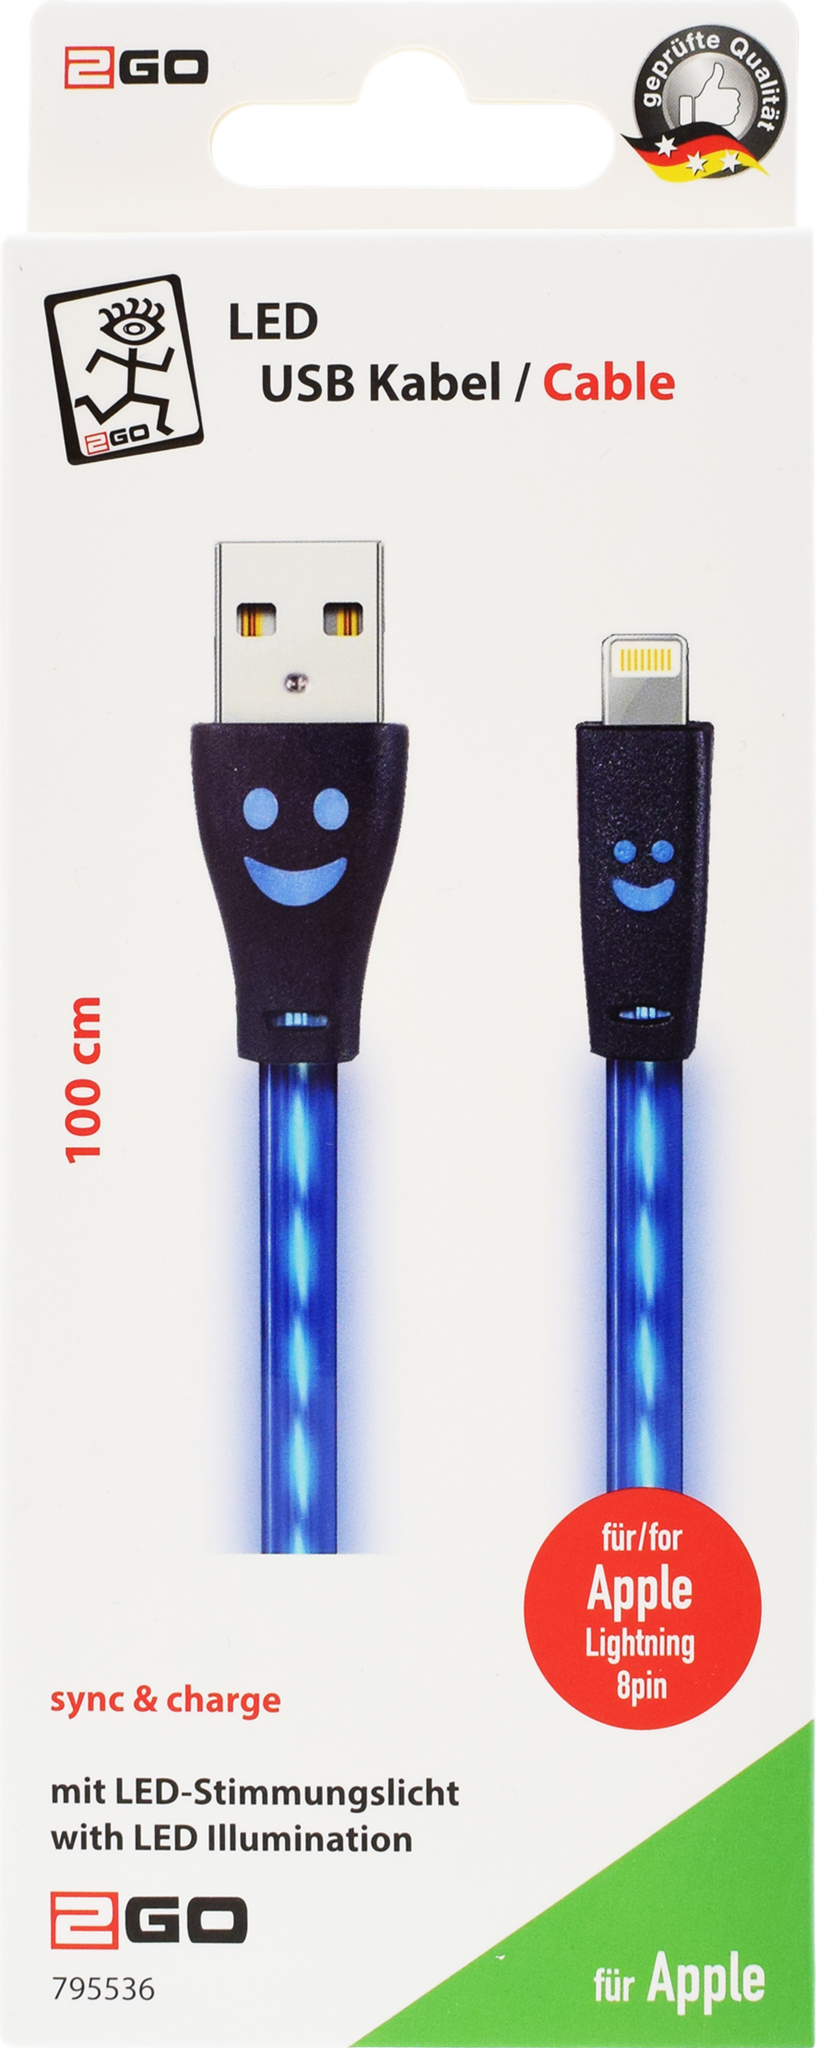 2GO-Mobile.net -B2B-. 2GO USB-datacable LED, blue, for iPhone 5 / 5c / 5s /  6 / 6plus